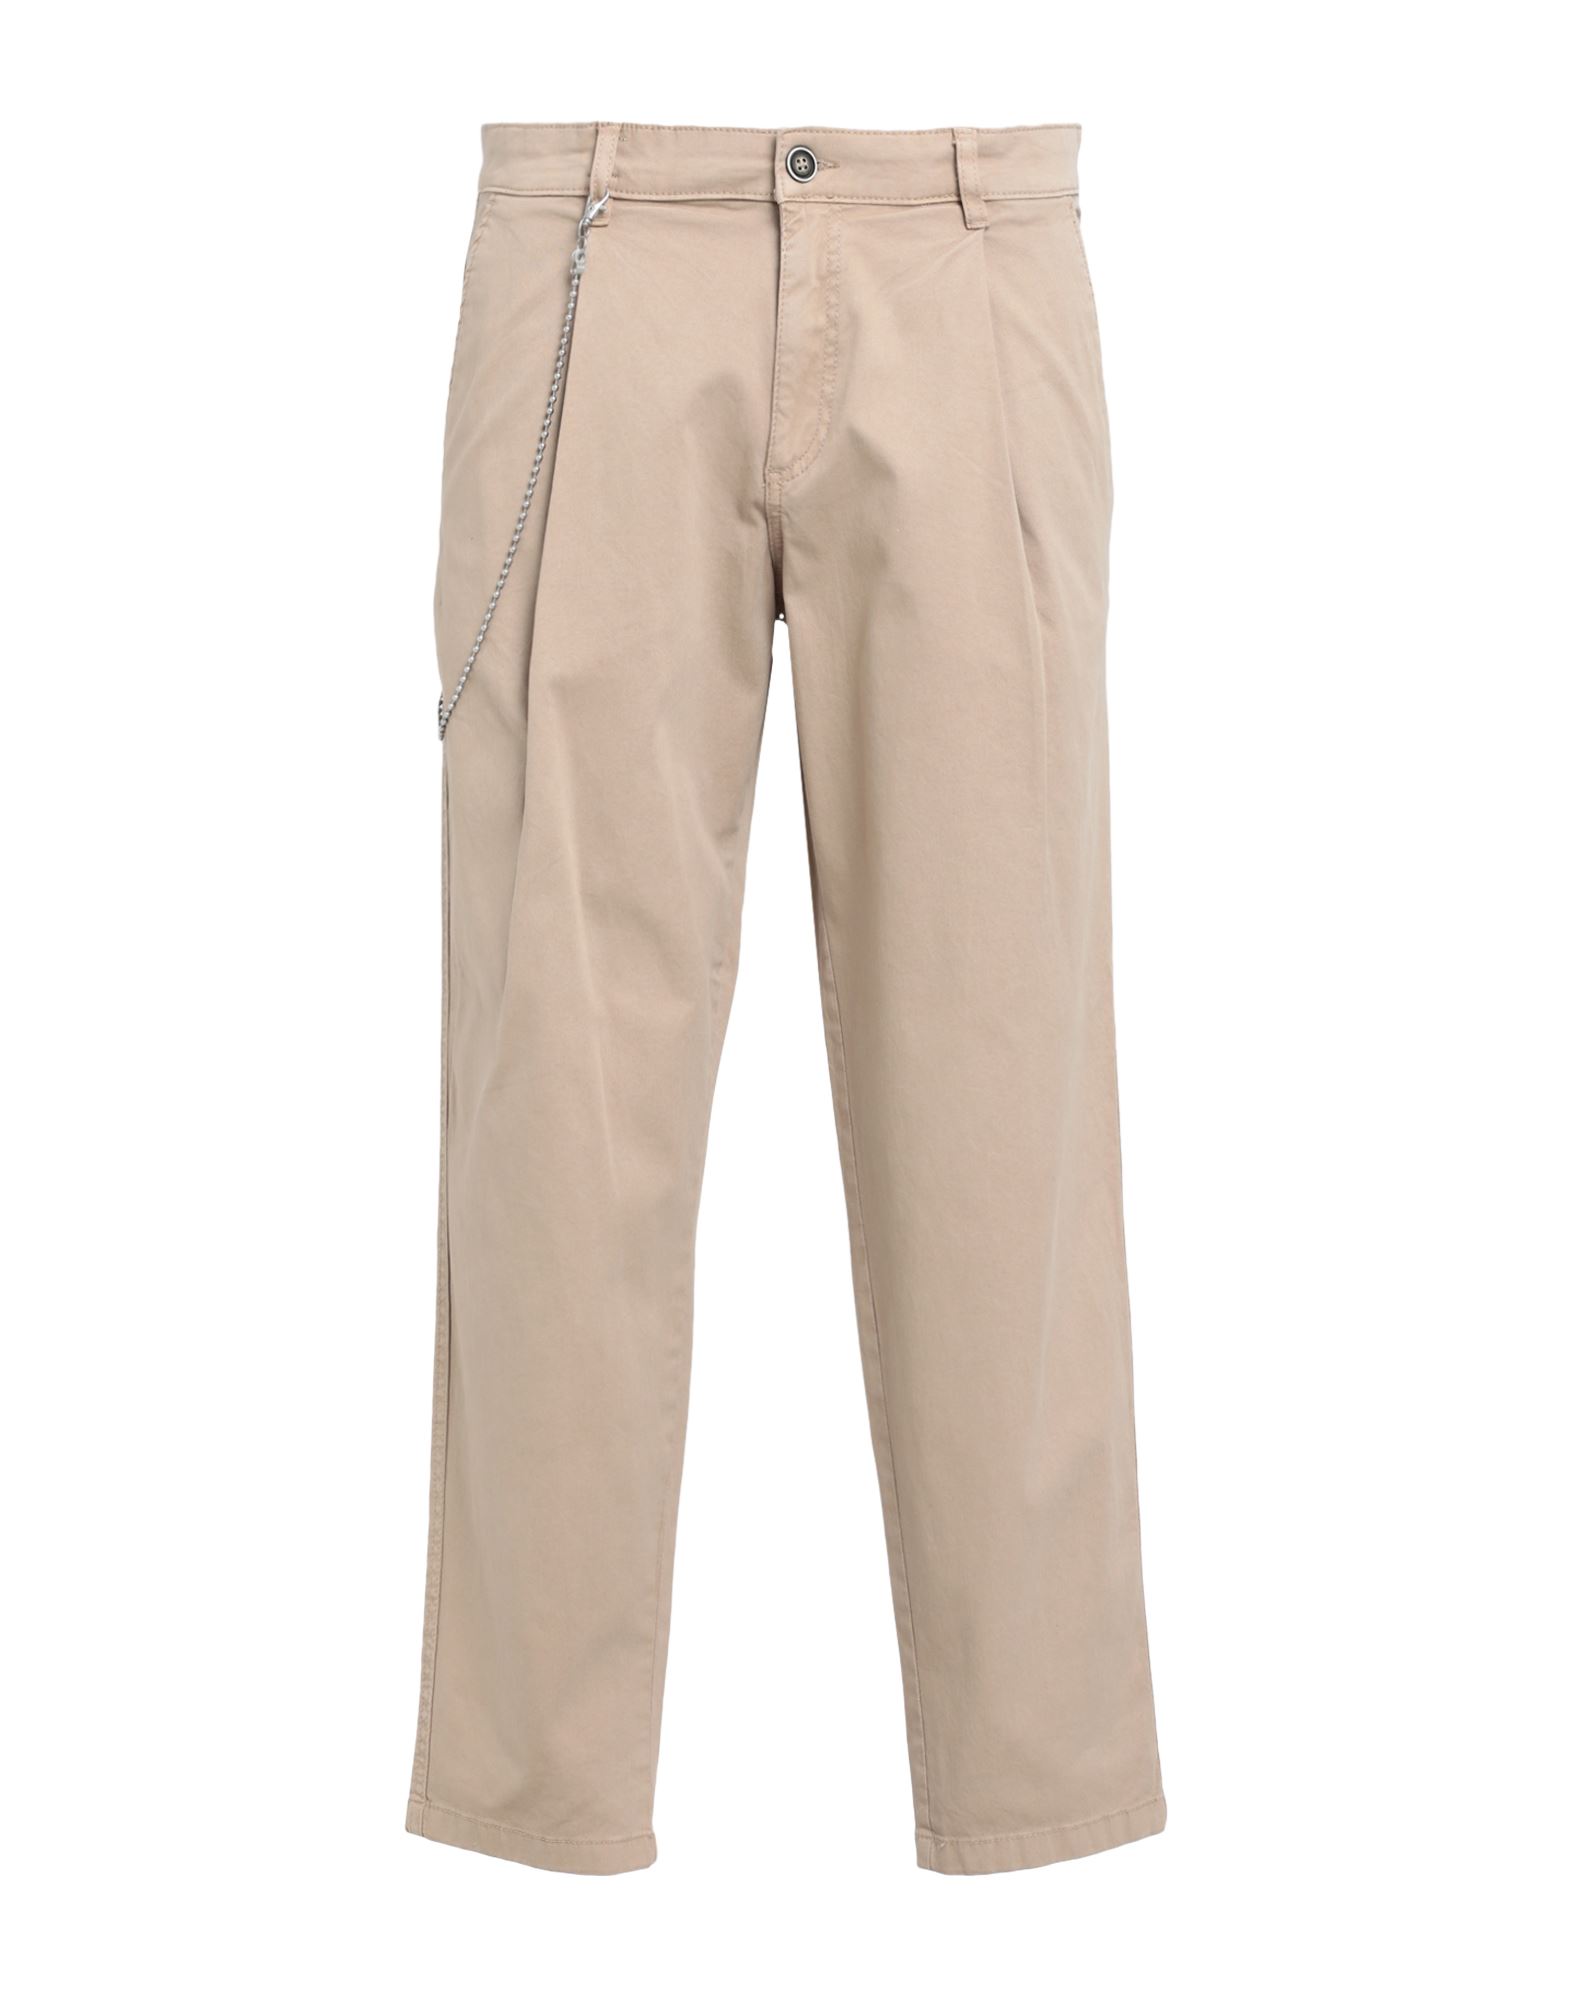 Jack & Jones Man Pants Beige Size 31w-32l Cotton, Elastane